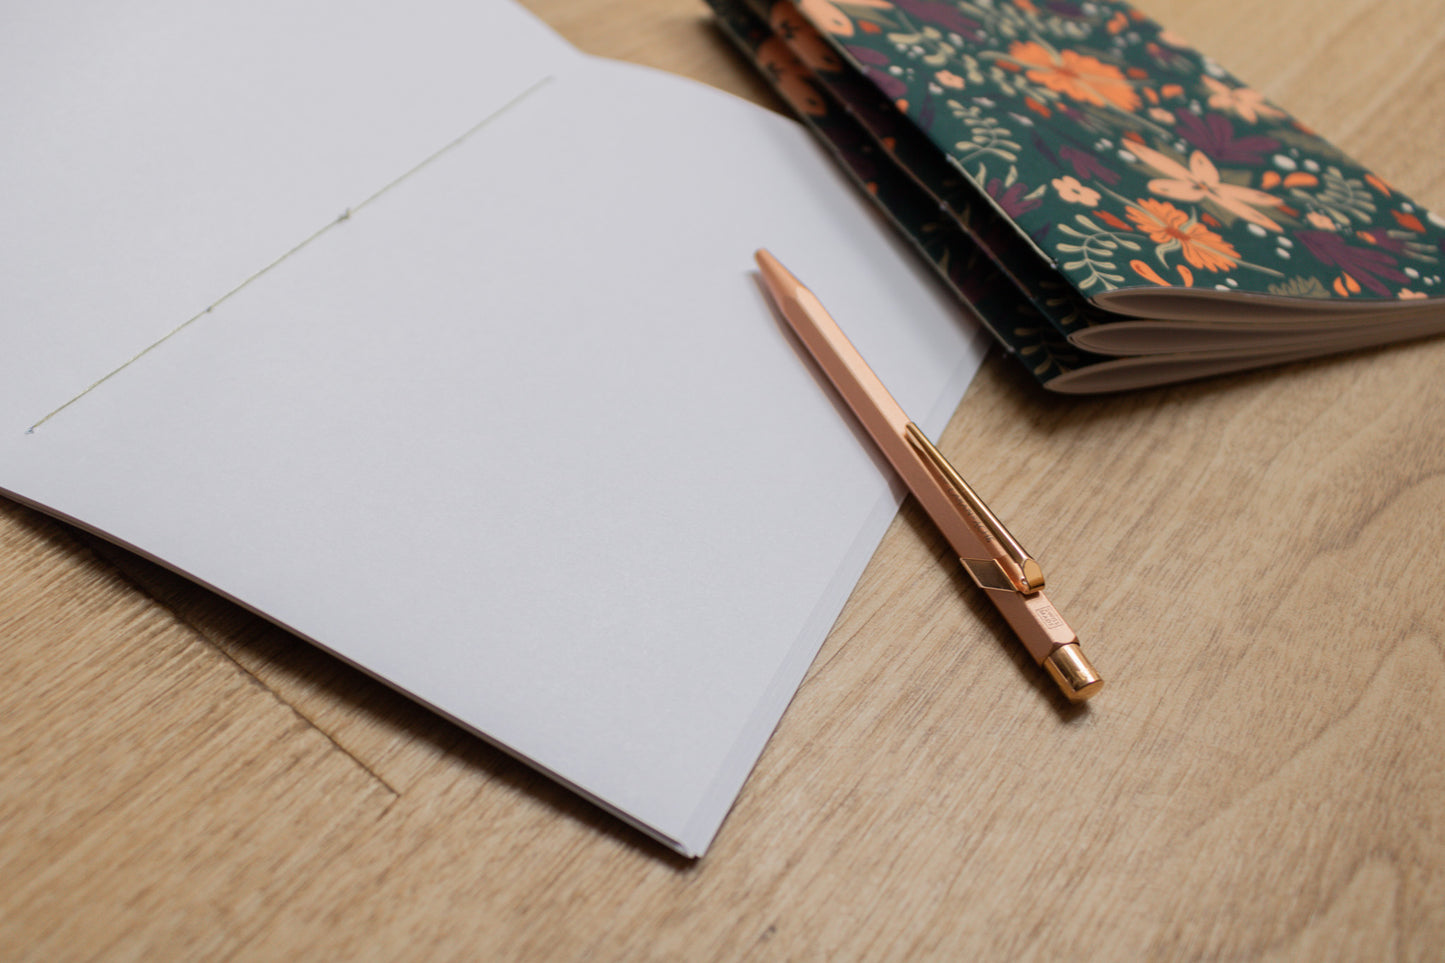 Handmade A5 notebook with autumnal floral design by MellowApricotStudio & KreativWerkstatt24 - blank inner close up